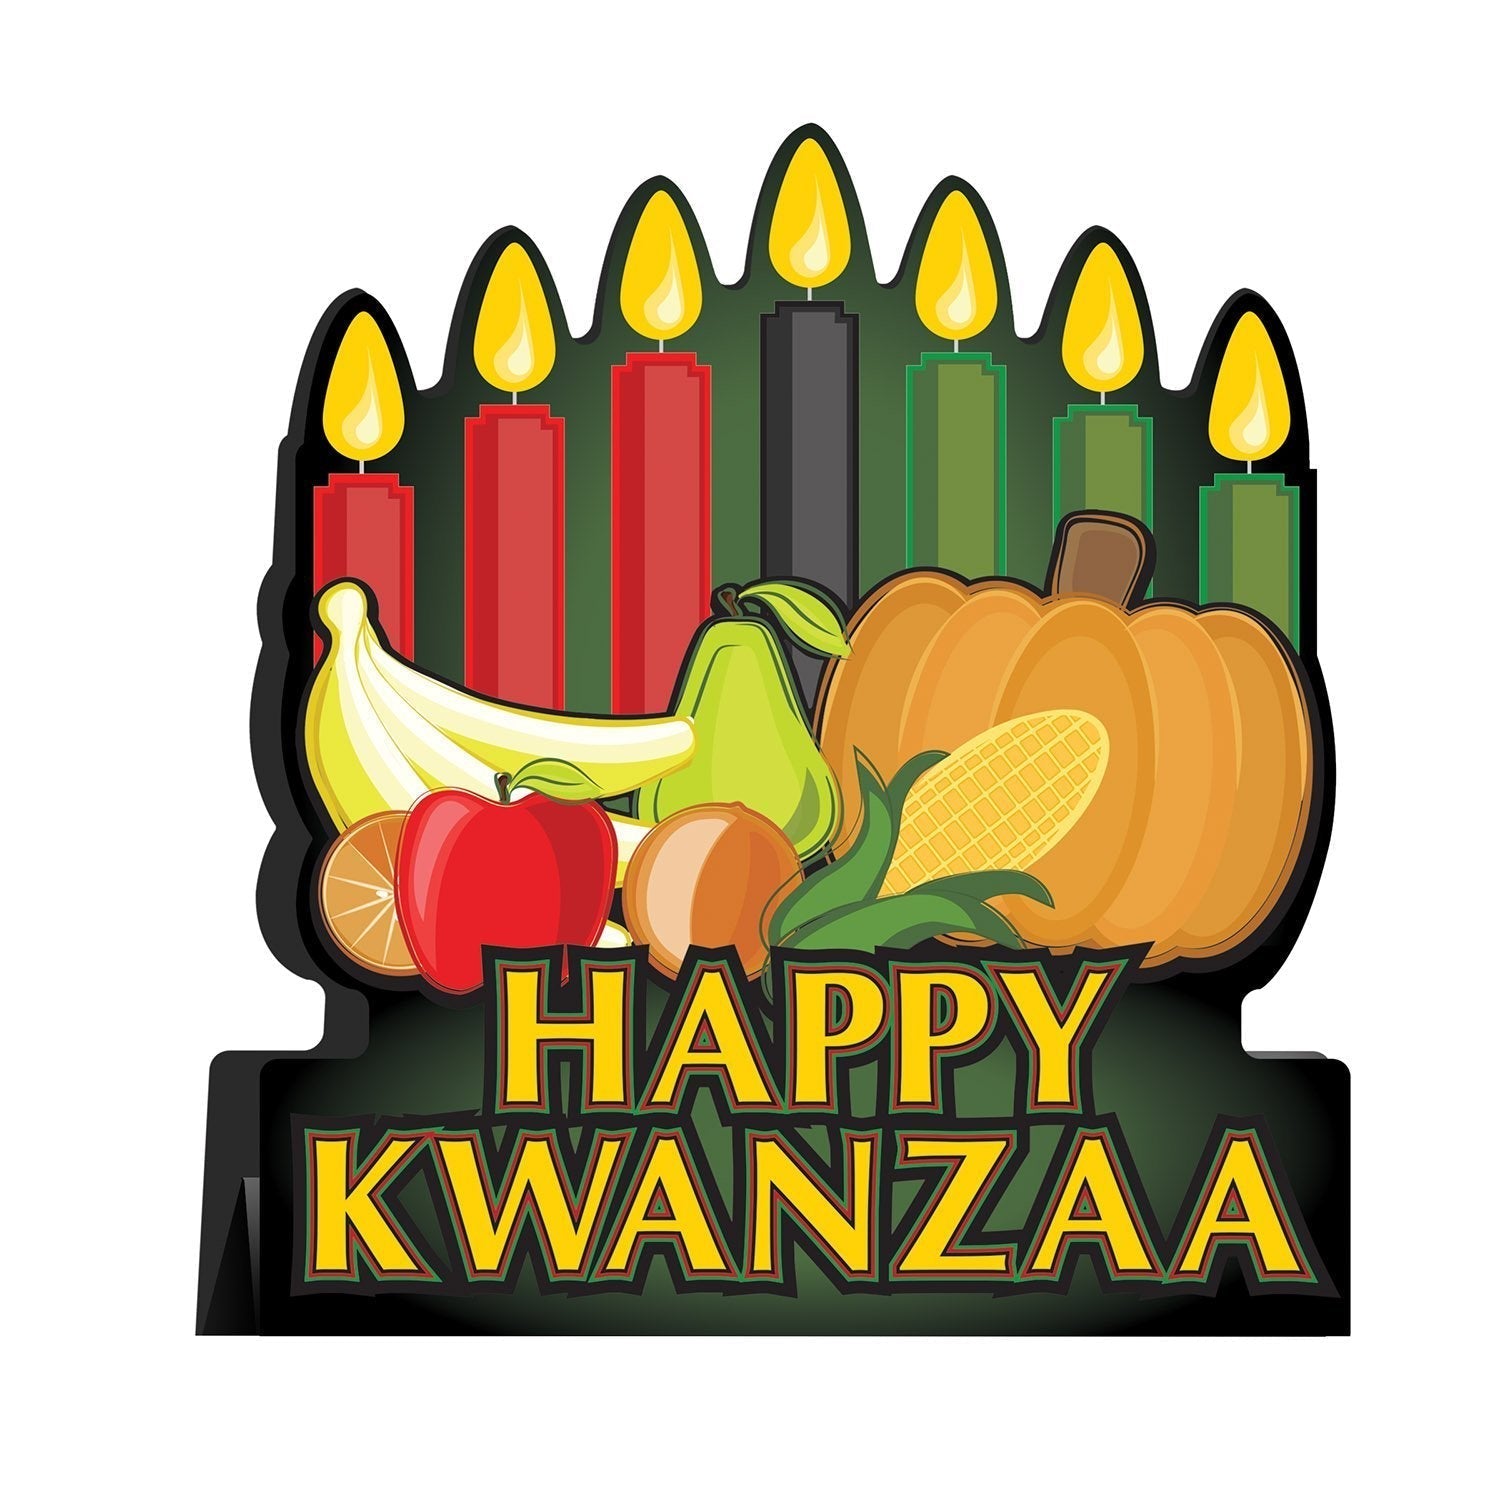 Kwanzaa Party Supplies